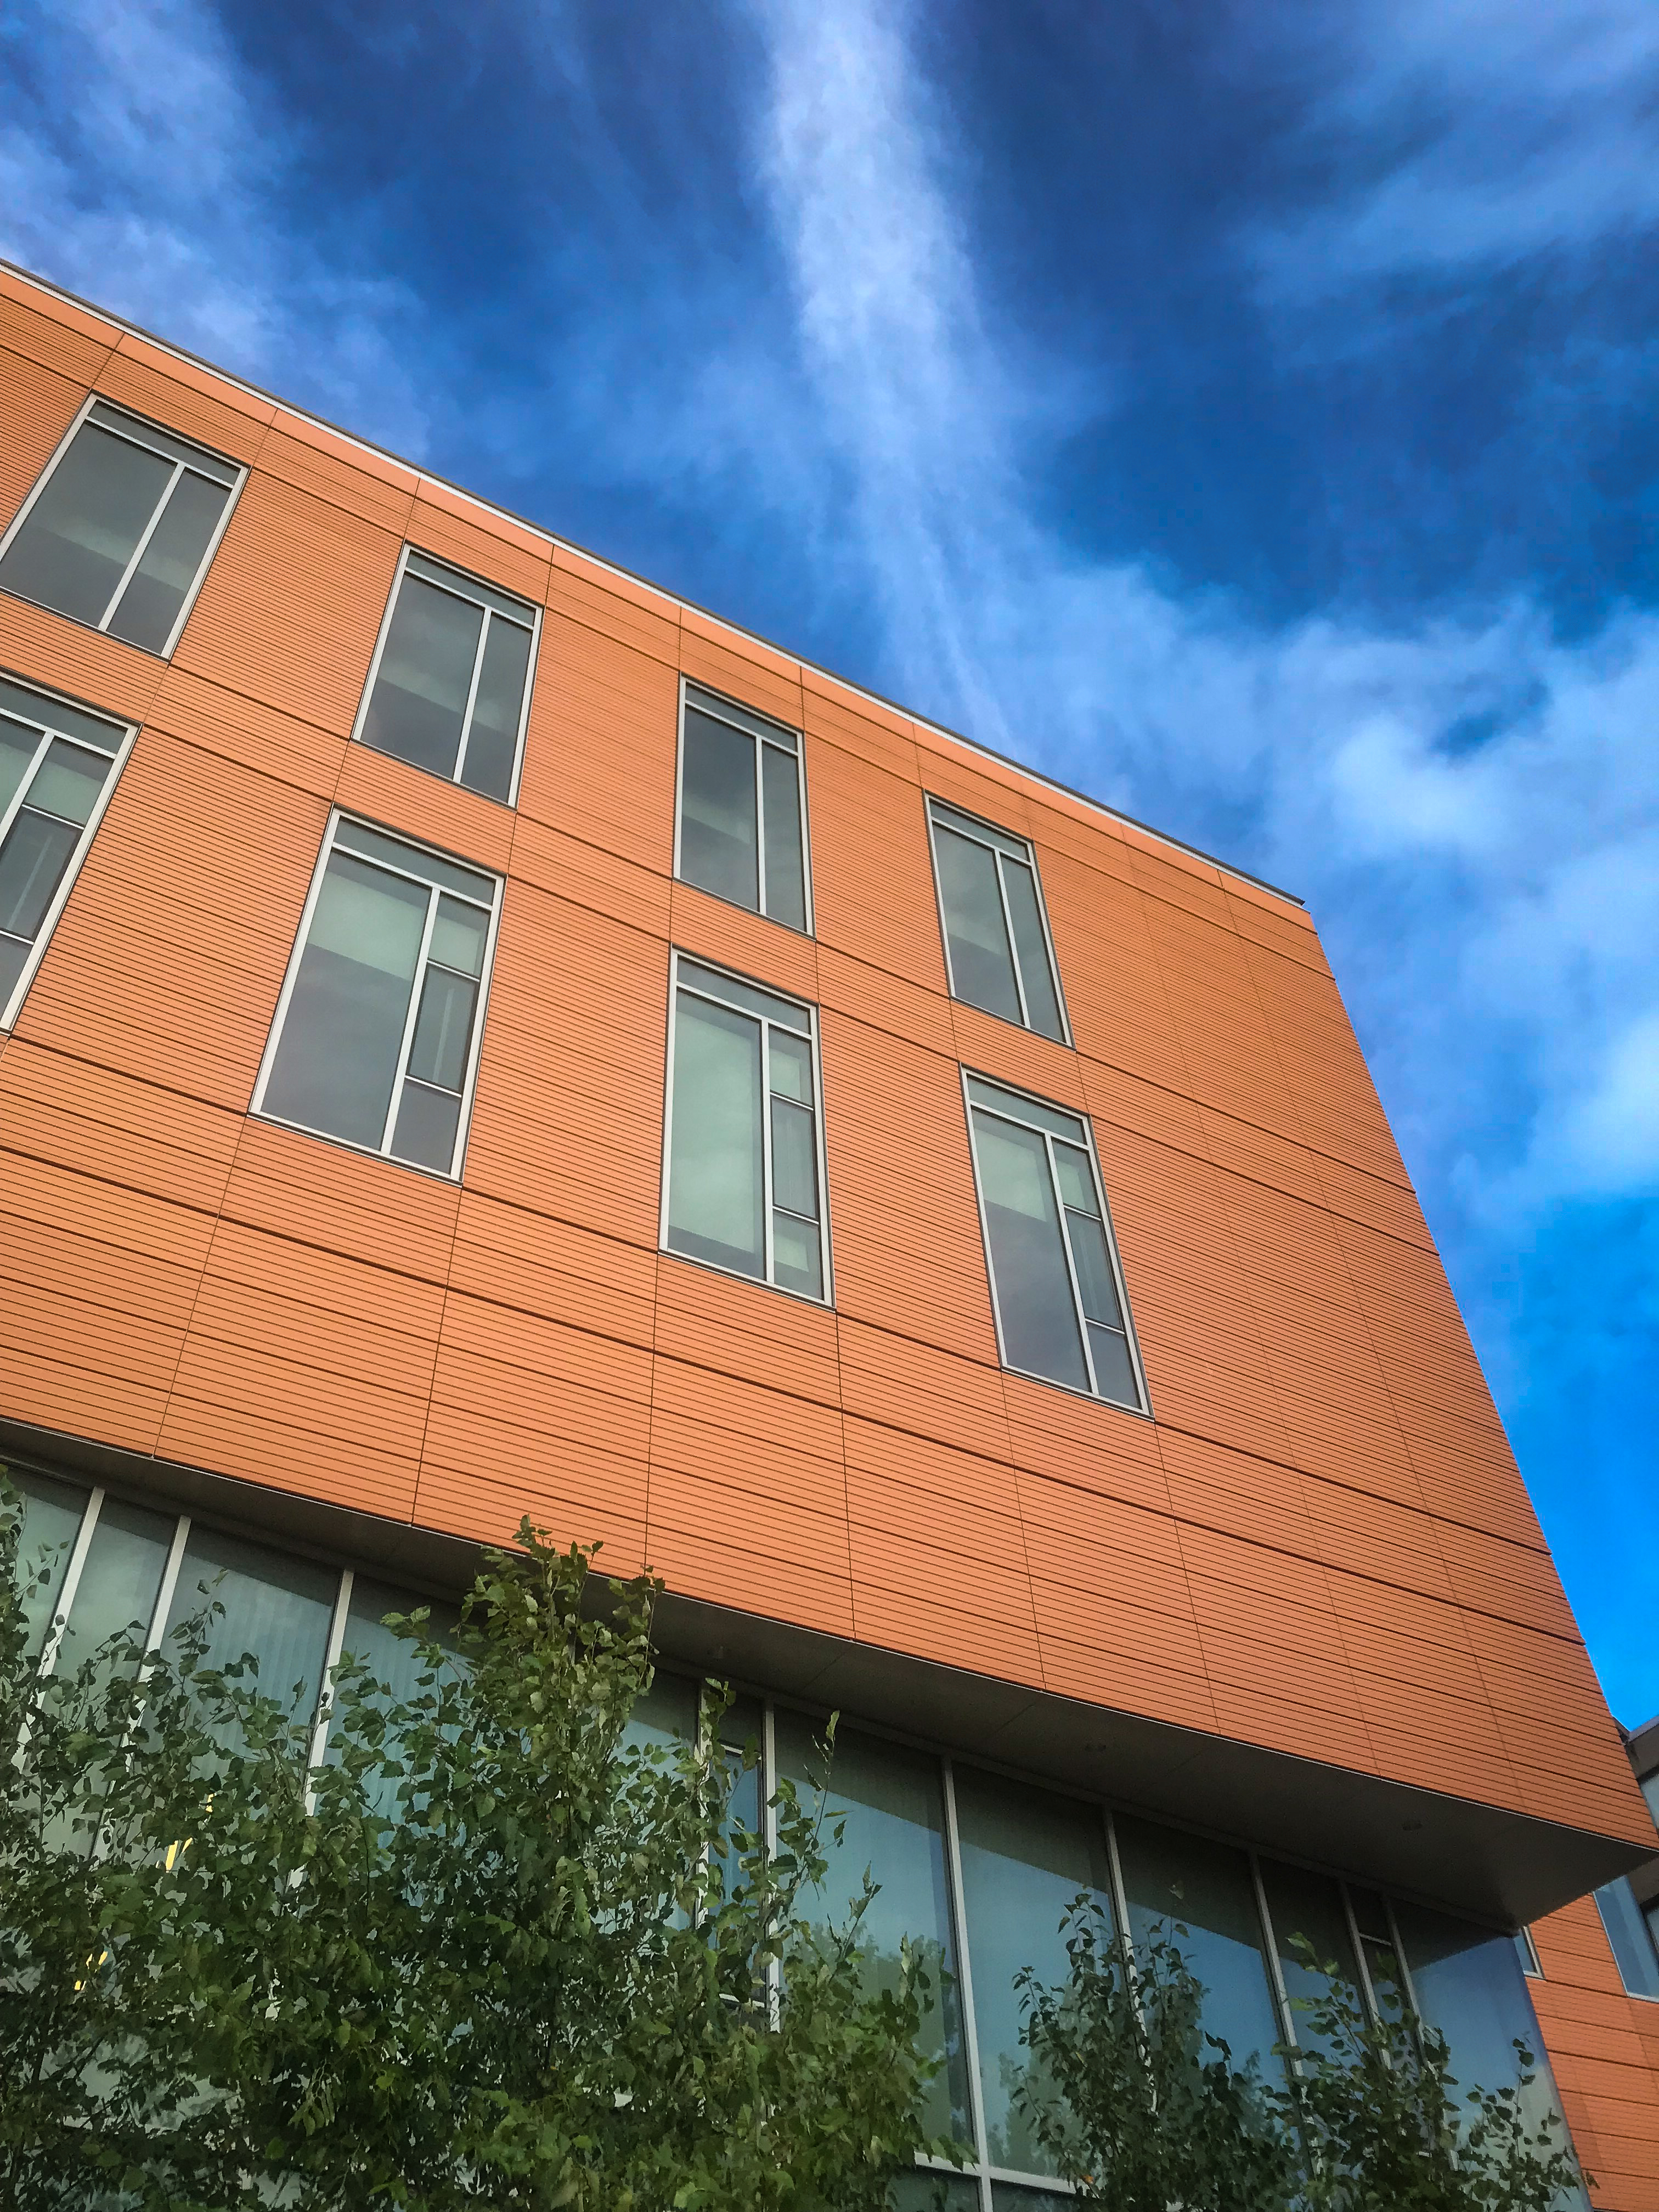 See Salem's modern architecture at Salem State University's sleek, orange-hued Shepley Bulfinch-designed library clad in terracotta from NBK Terracotta.